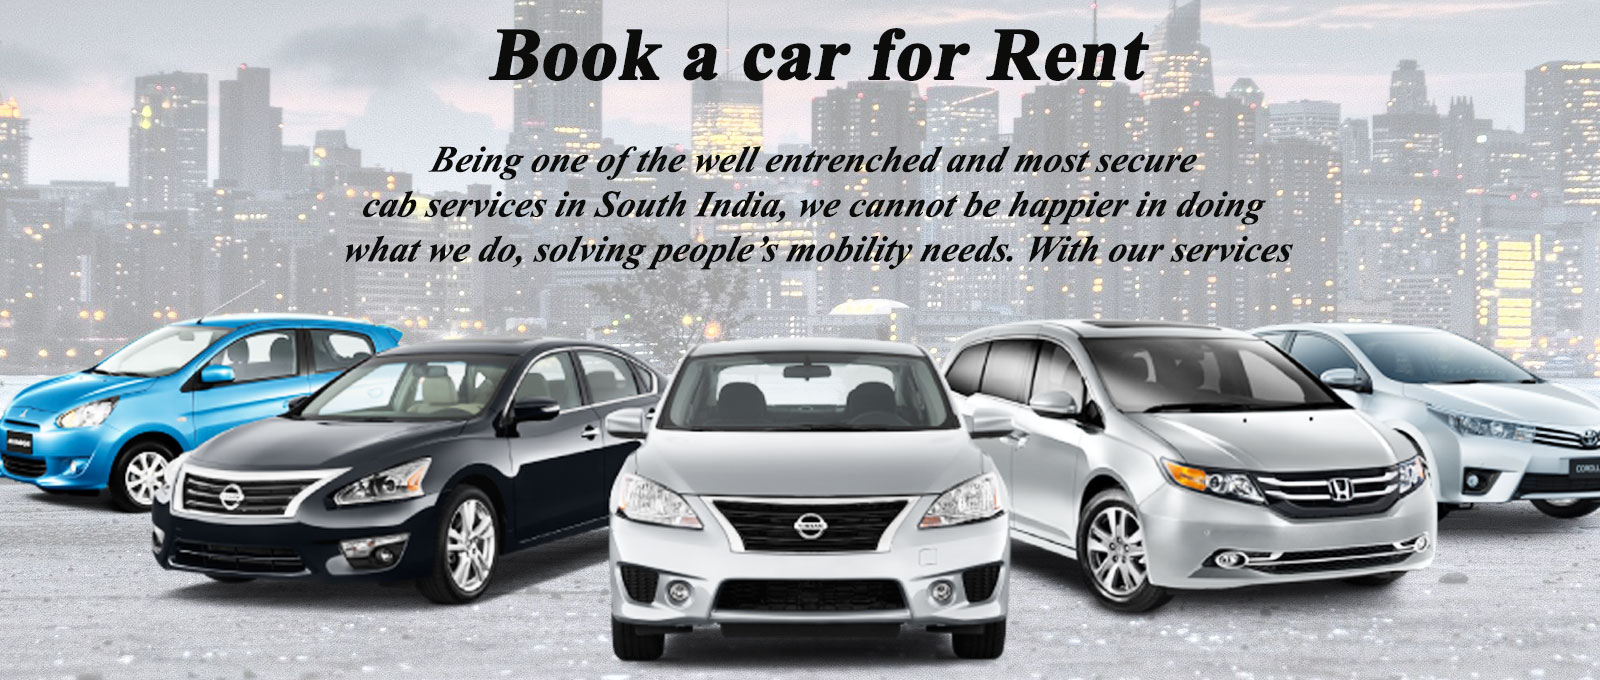 Luxury Car Rental Services in Chennai